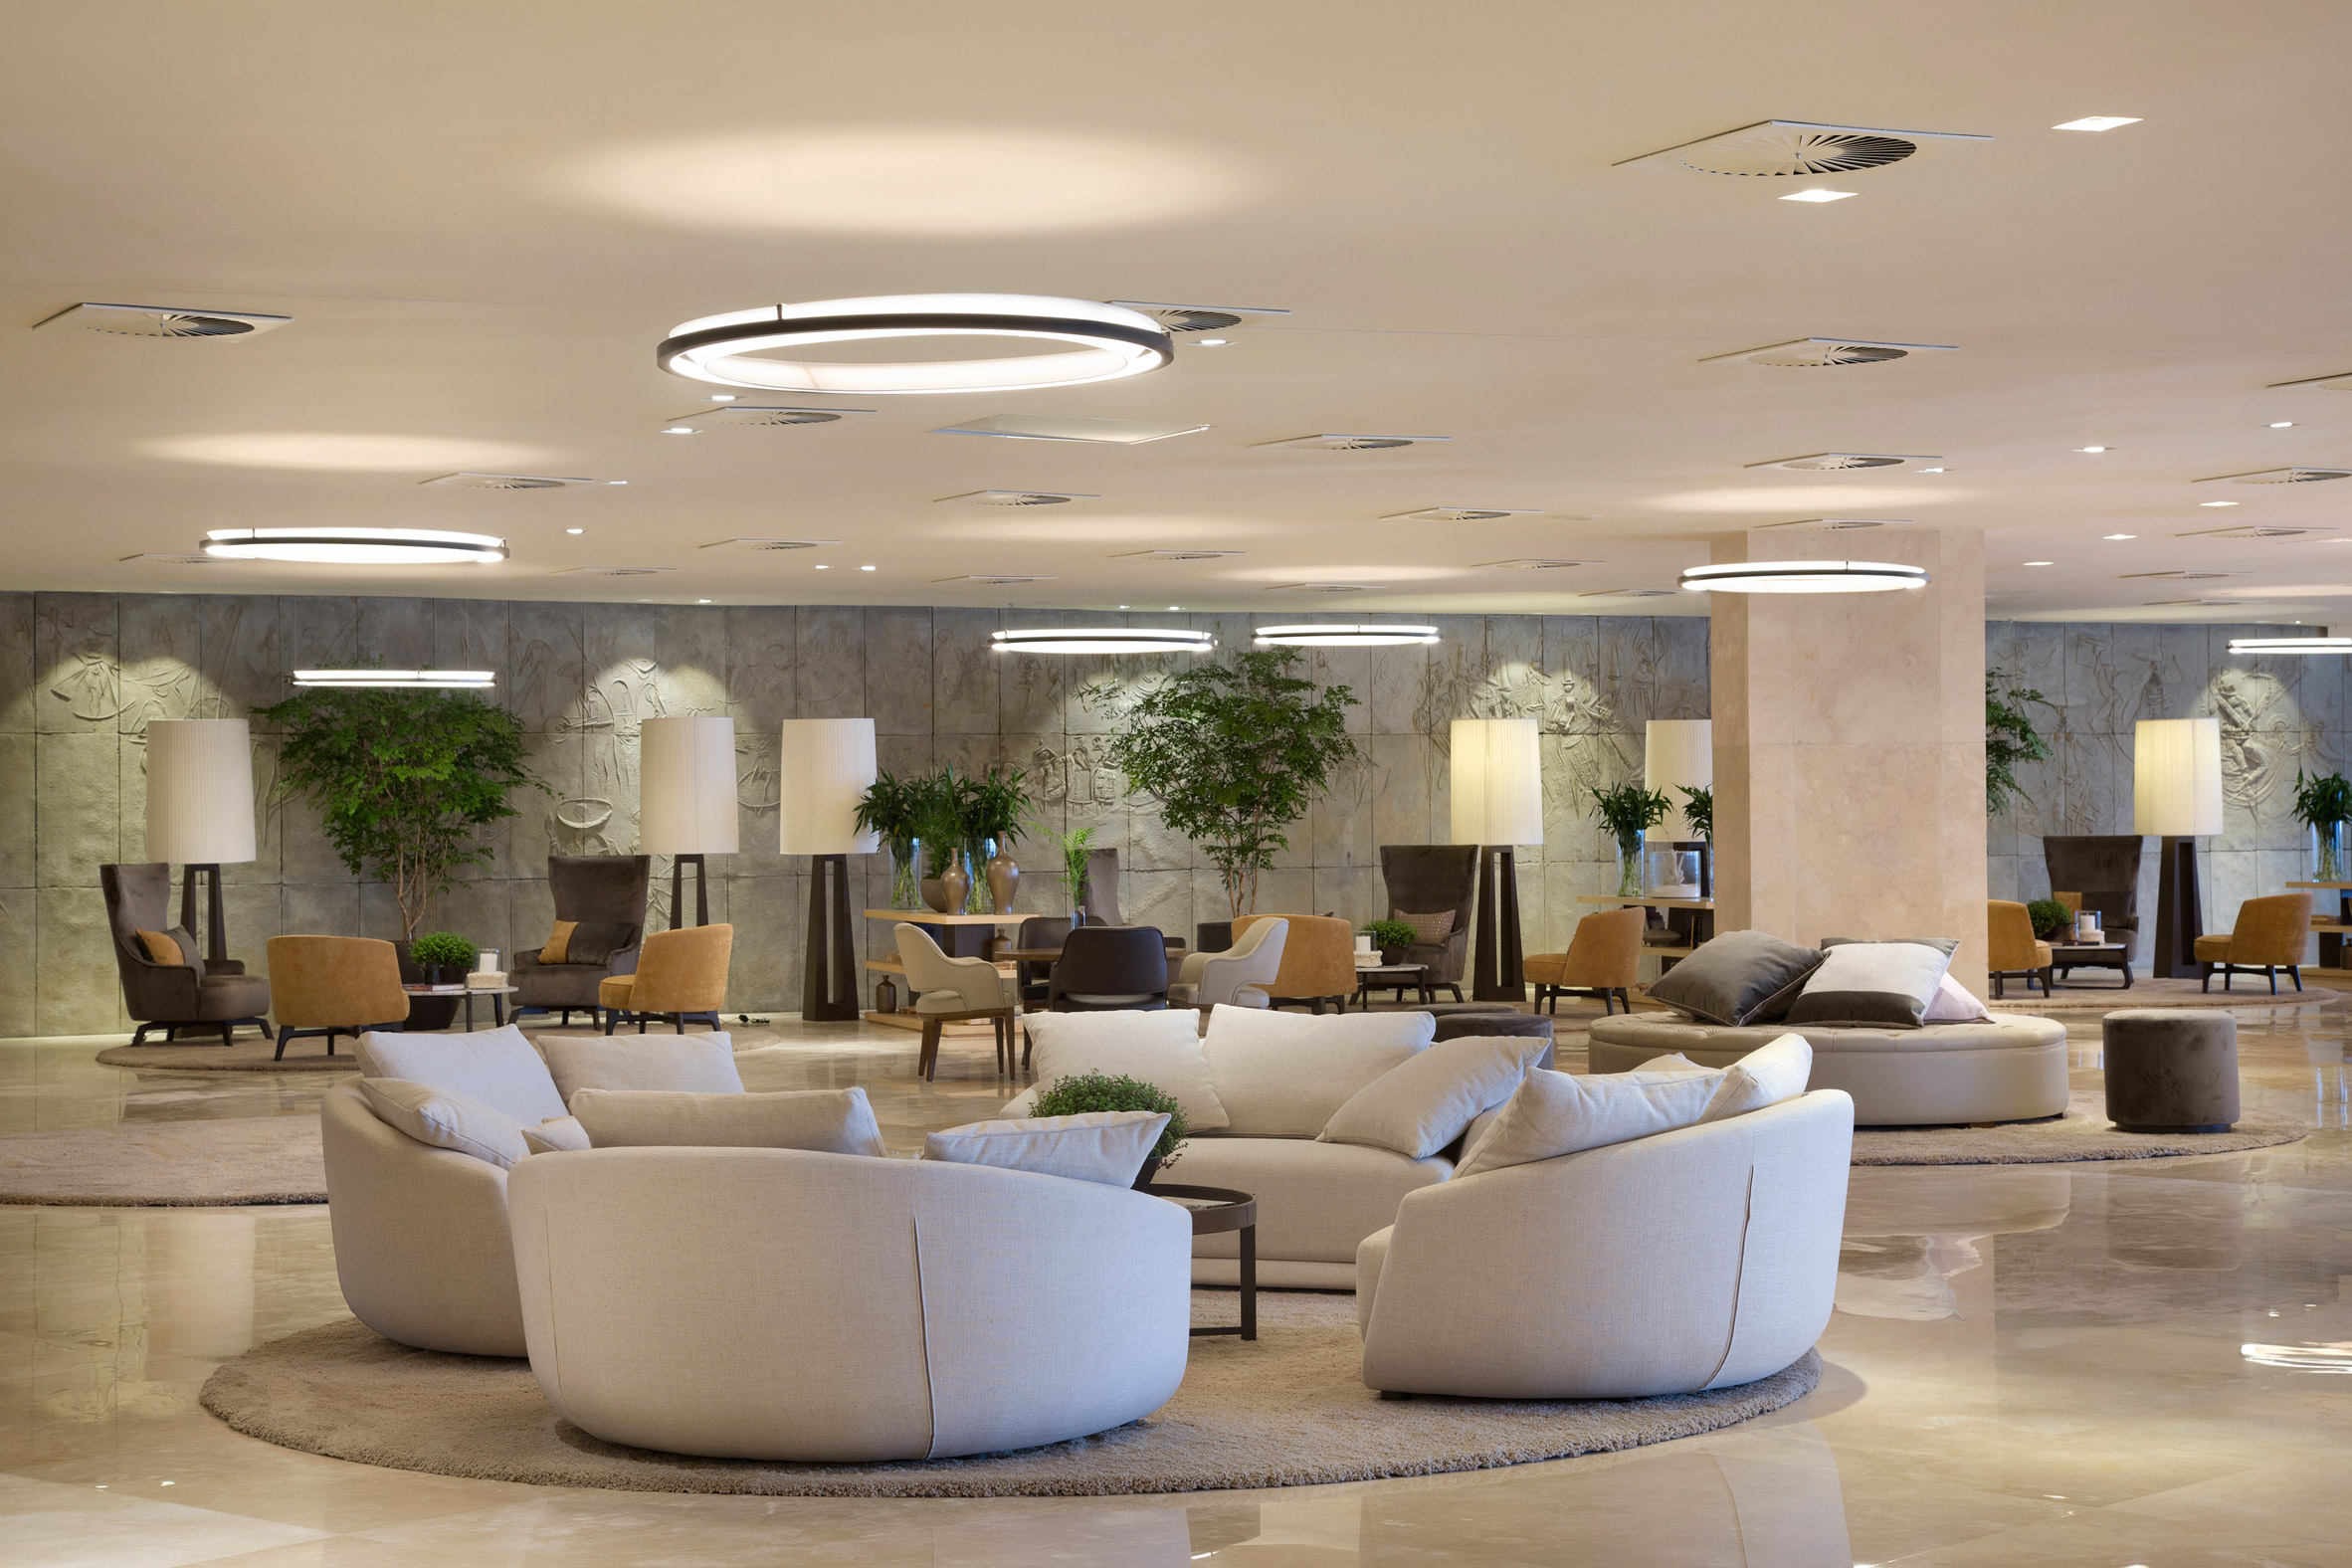 hotel-nacional-oscar-niemeyer-renovation-interiors-rio-news_dezeen_2364_col_5